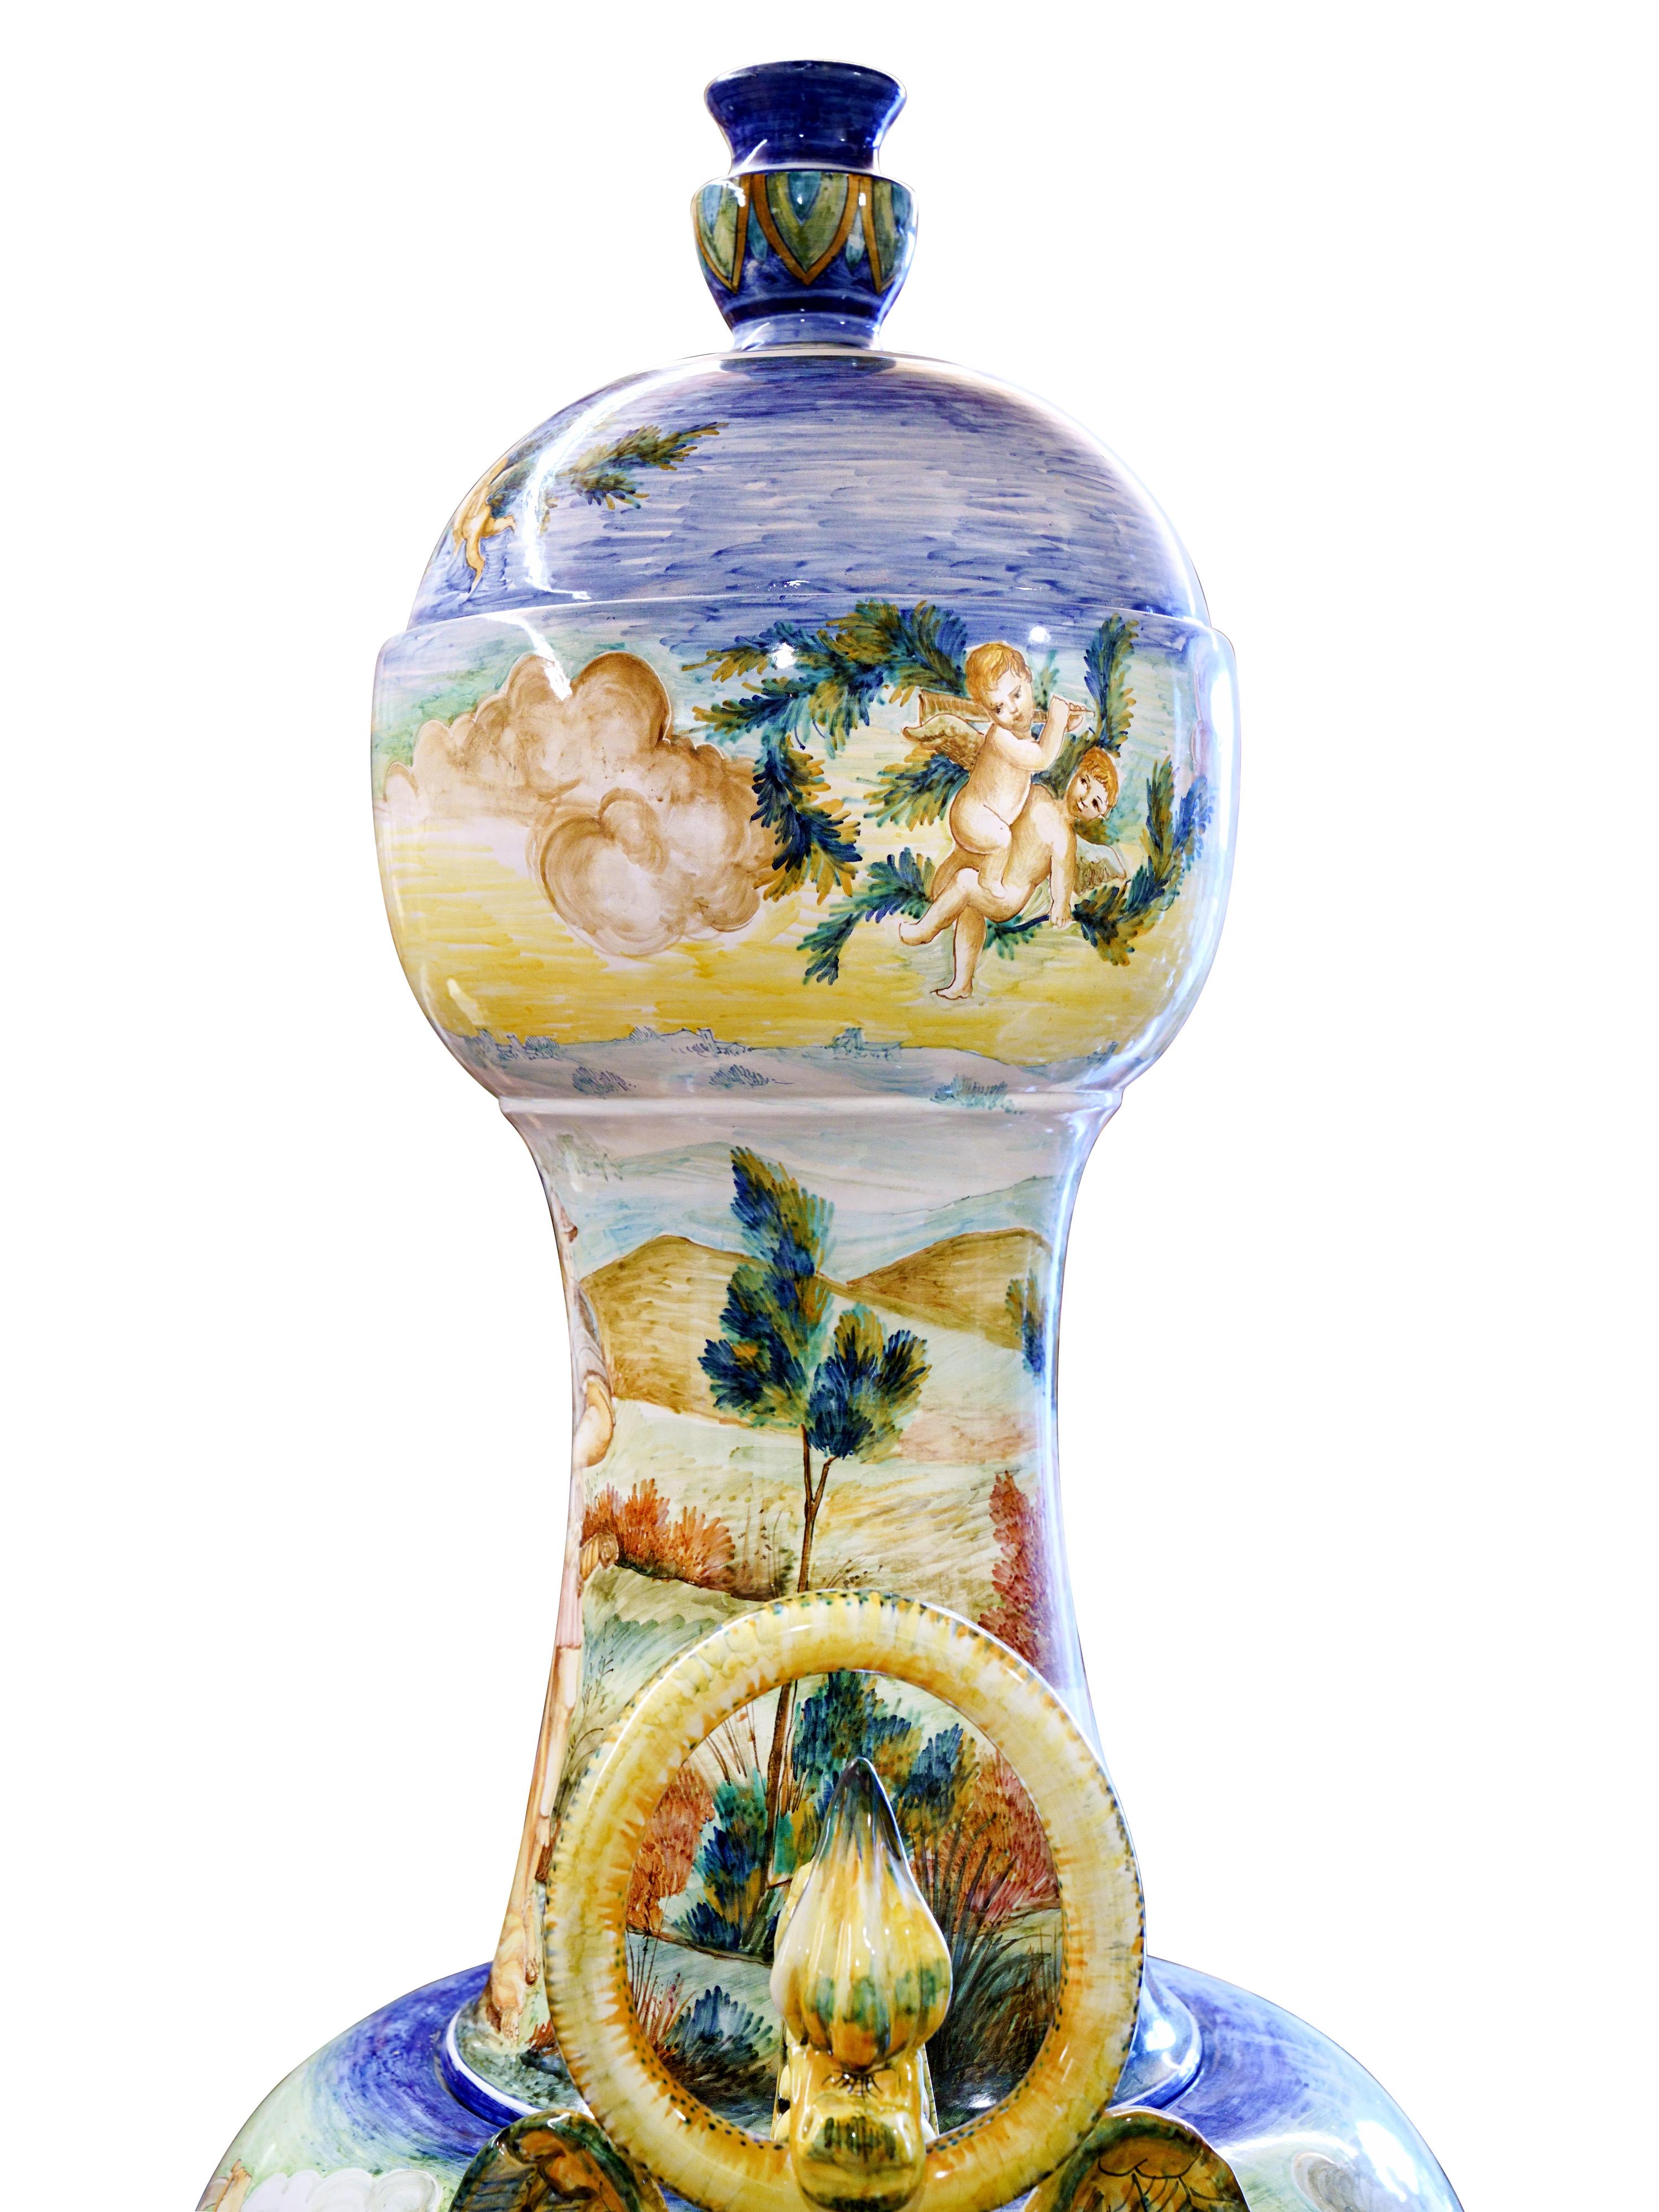 Hand-Carved Majestic Amphora Vase Majolica Painted Subject Inspired by Leonardo Da Vinci For Sale